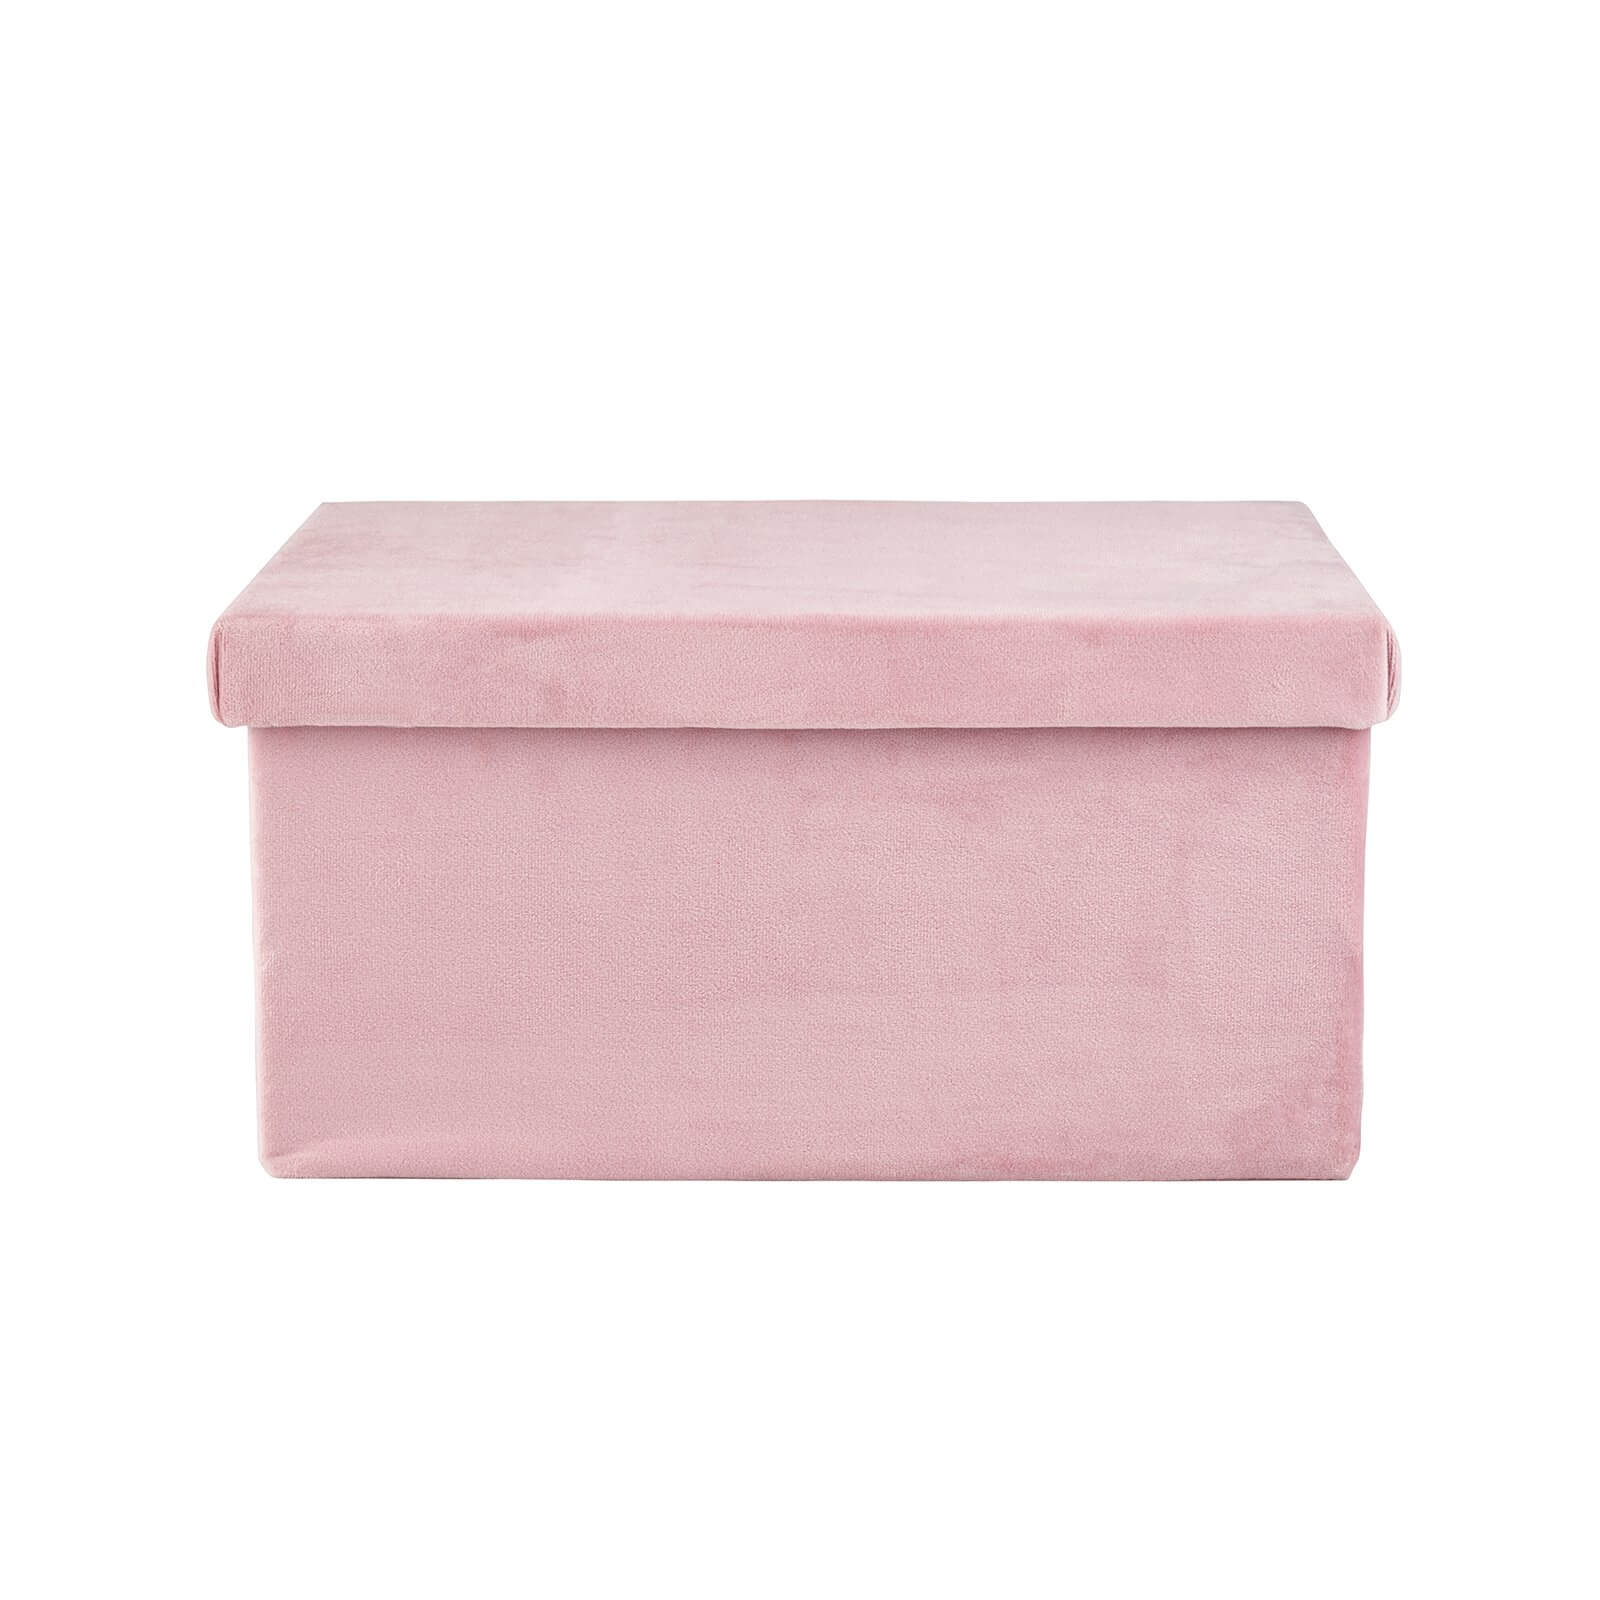 Velvet Storage Boxes - Blush - Set of 3